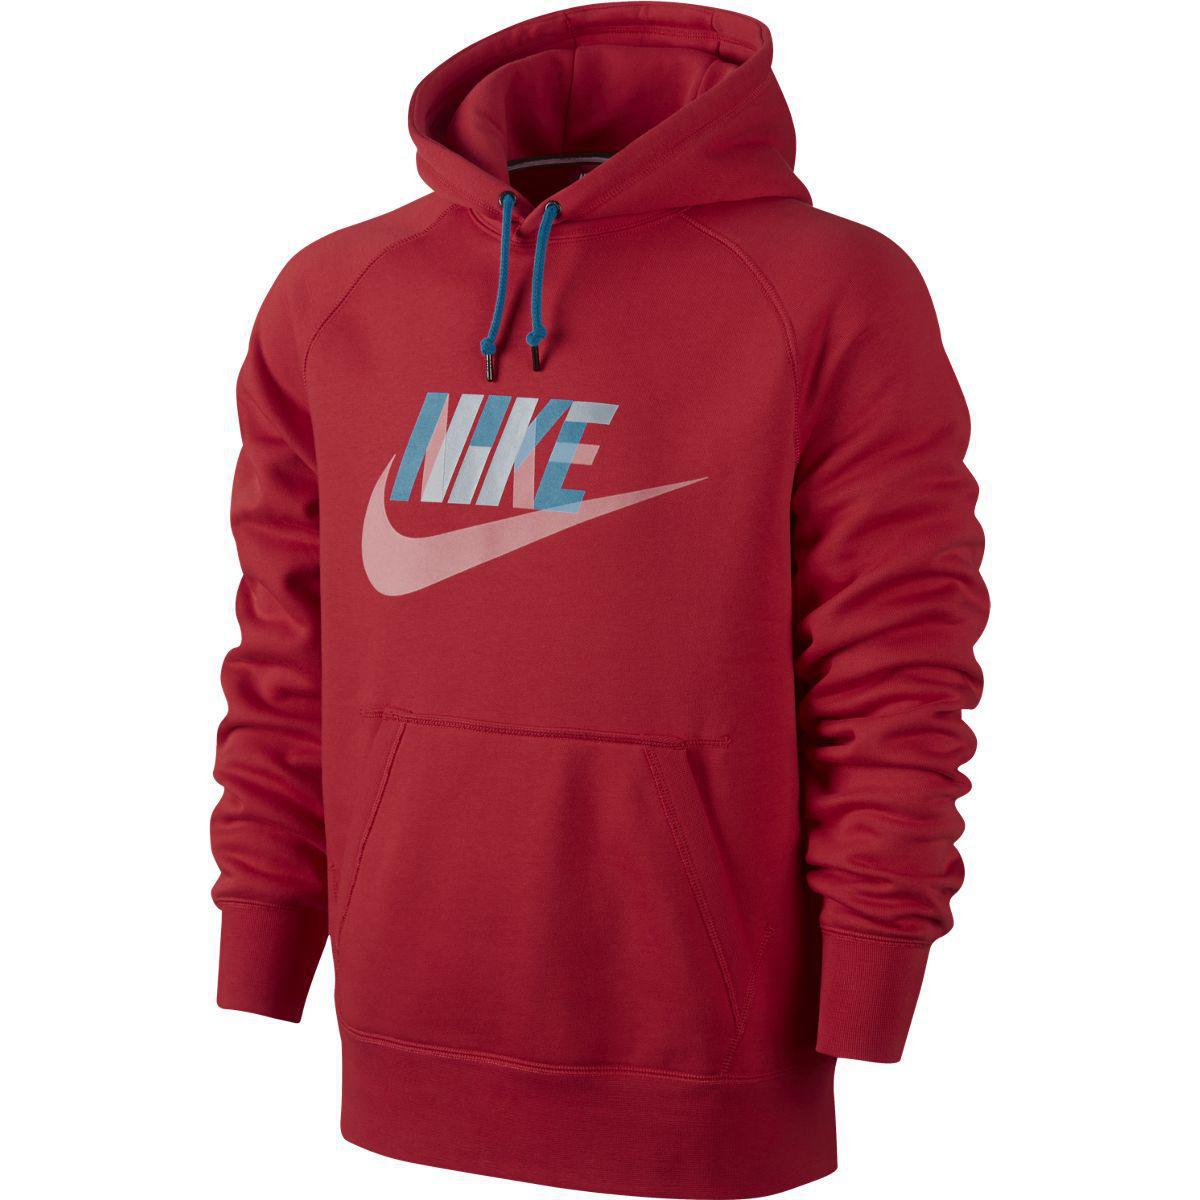 Nike Mens AW77 Fleece Hoodie - University Red - Tennisnuts.com